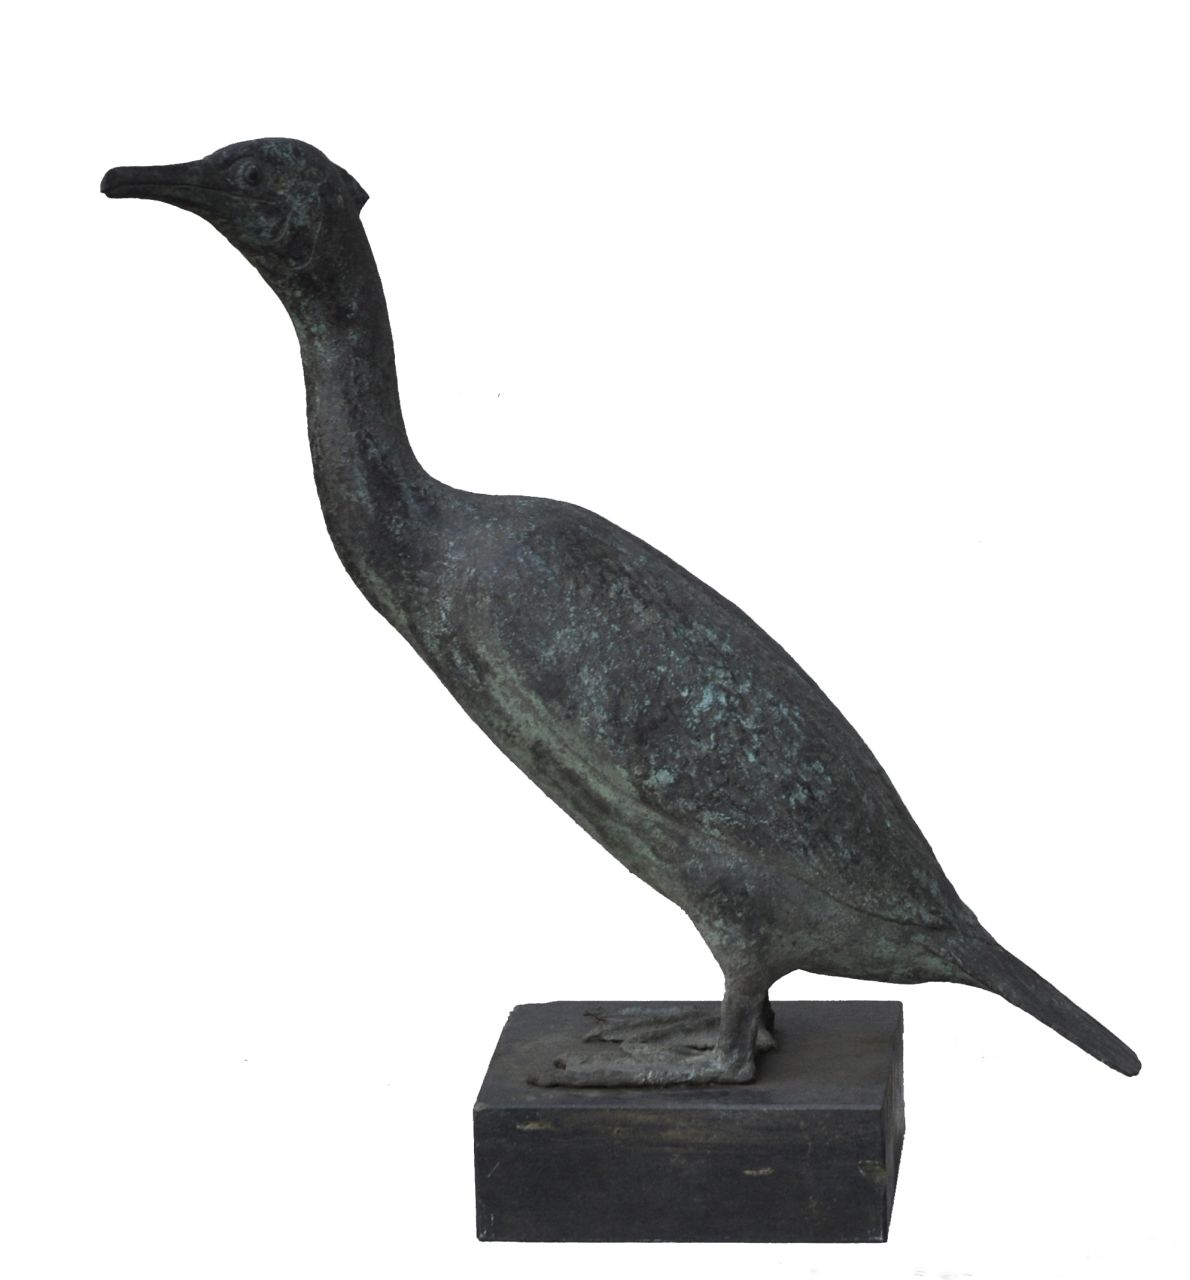 Starreveld P.  | Pieter Starreveld, Cormorant, bronze 85.0 x 56.0 cm